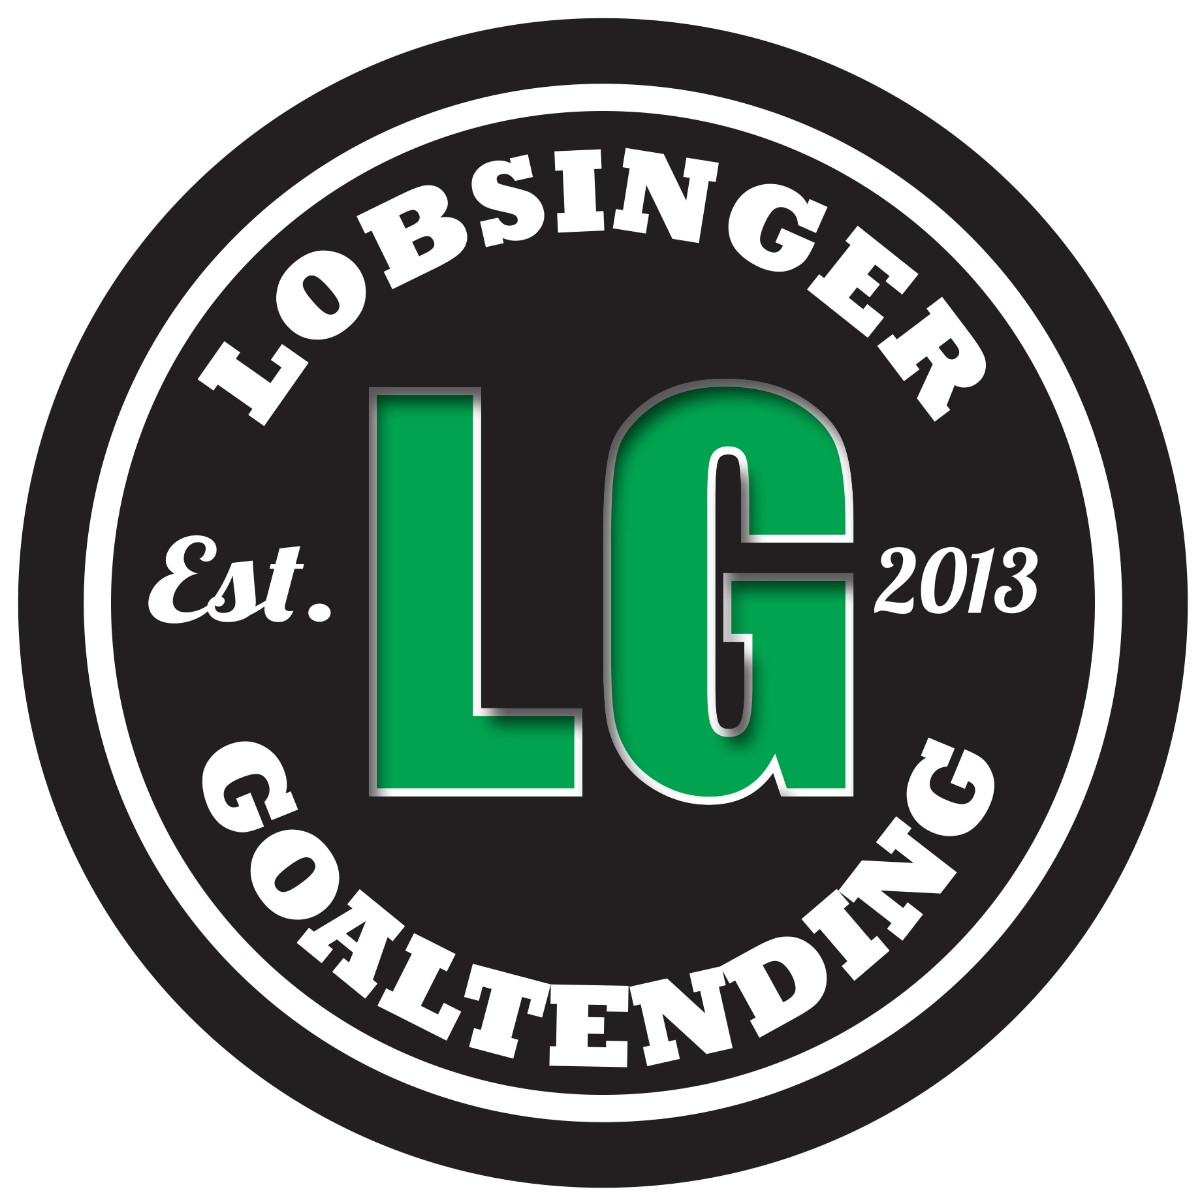 Lobsinger_-_LG_COL_LOGO.jpg